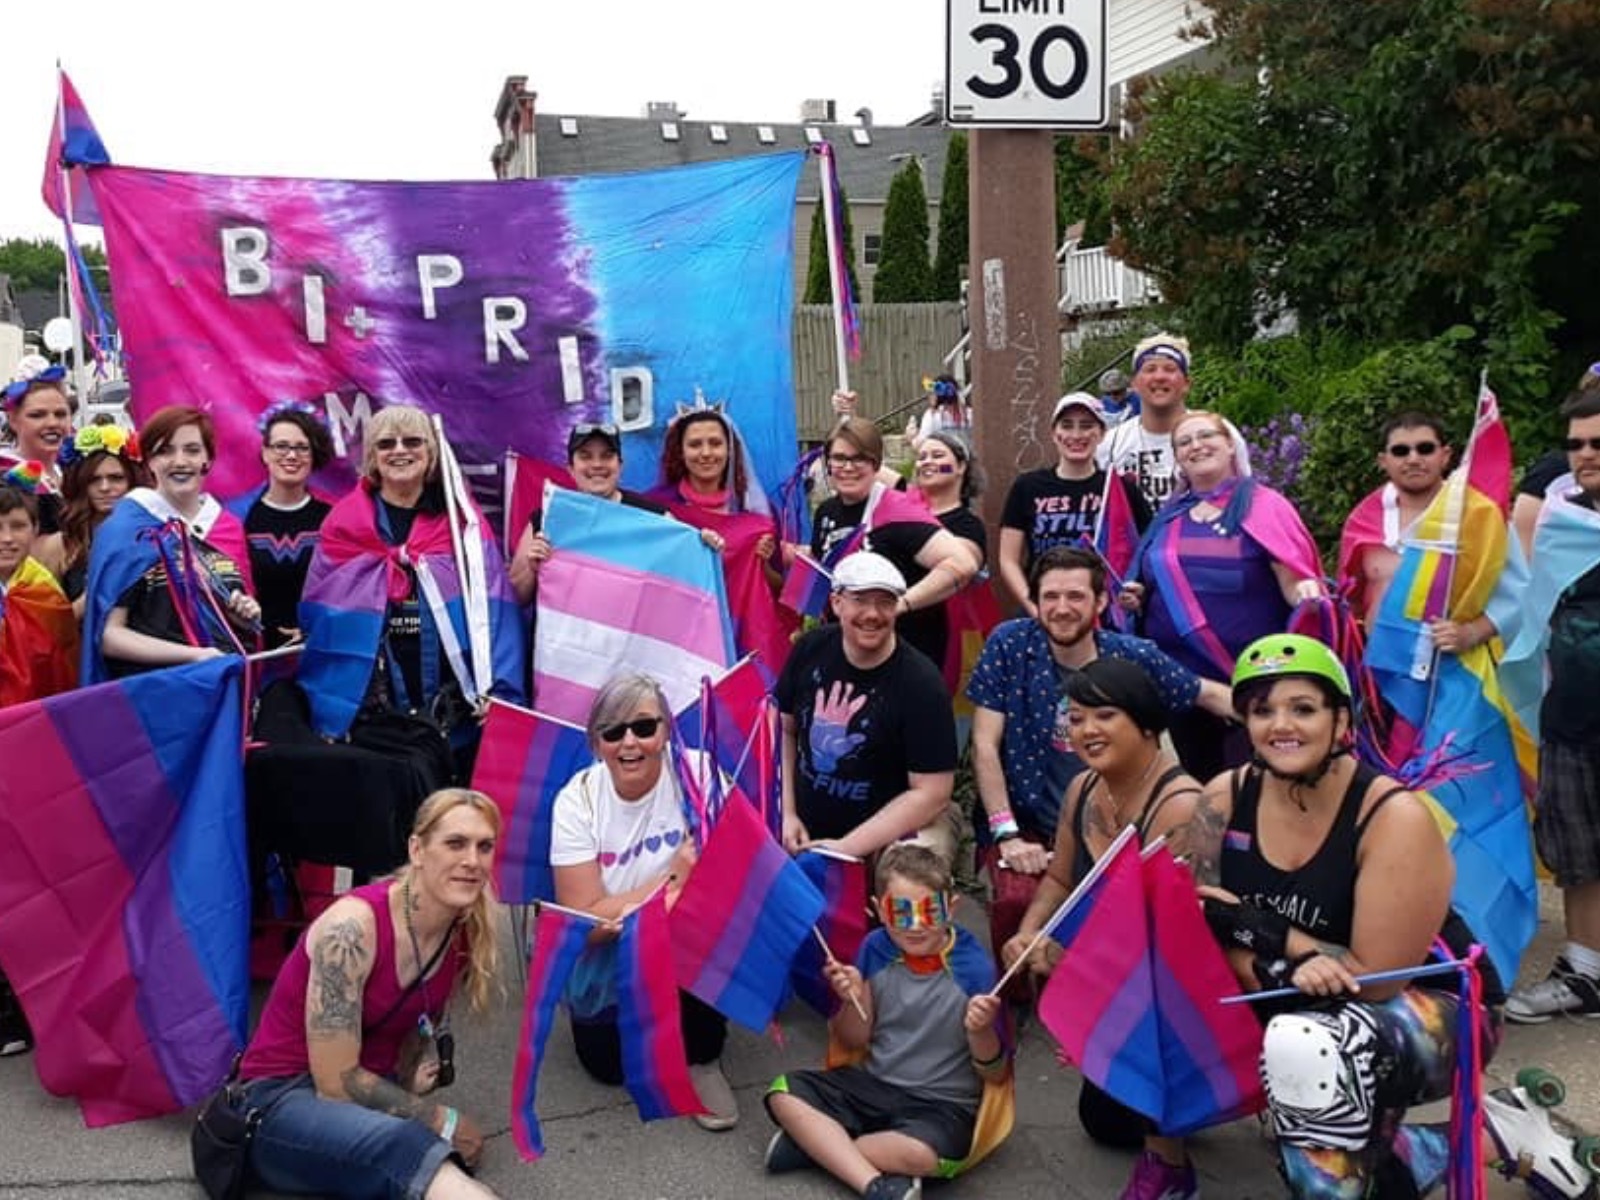 Bi+ Pride Milwaukee members holding bi